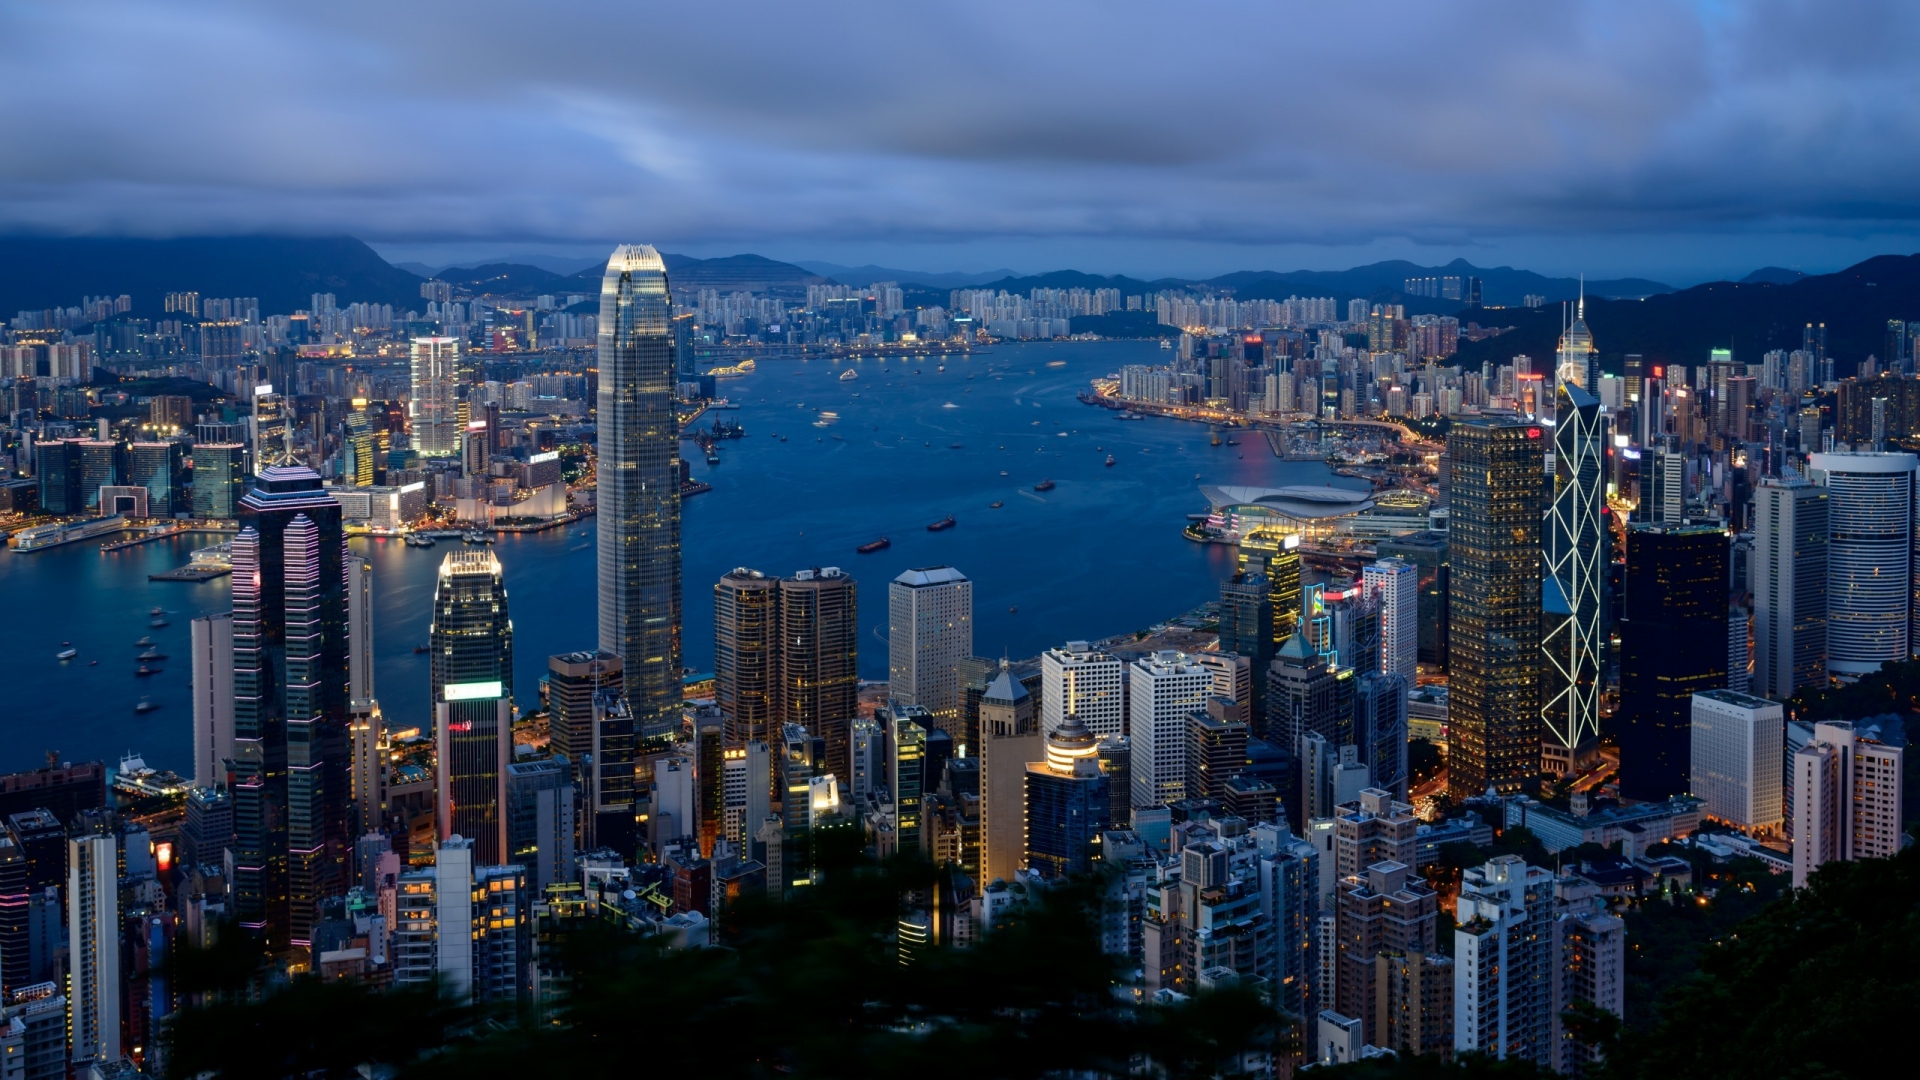 Hong Kong City View for 1920 x 1080 HDTV 1080p resolution